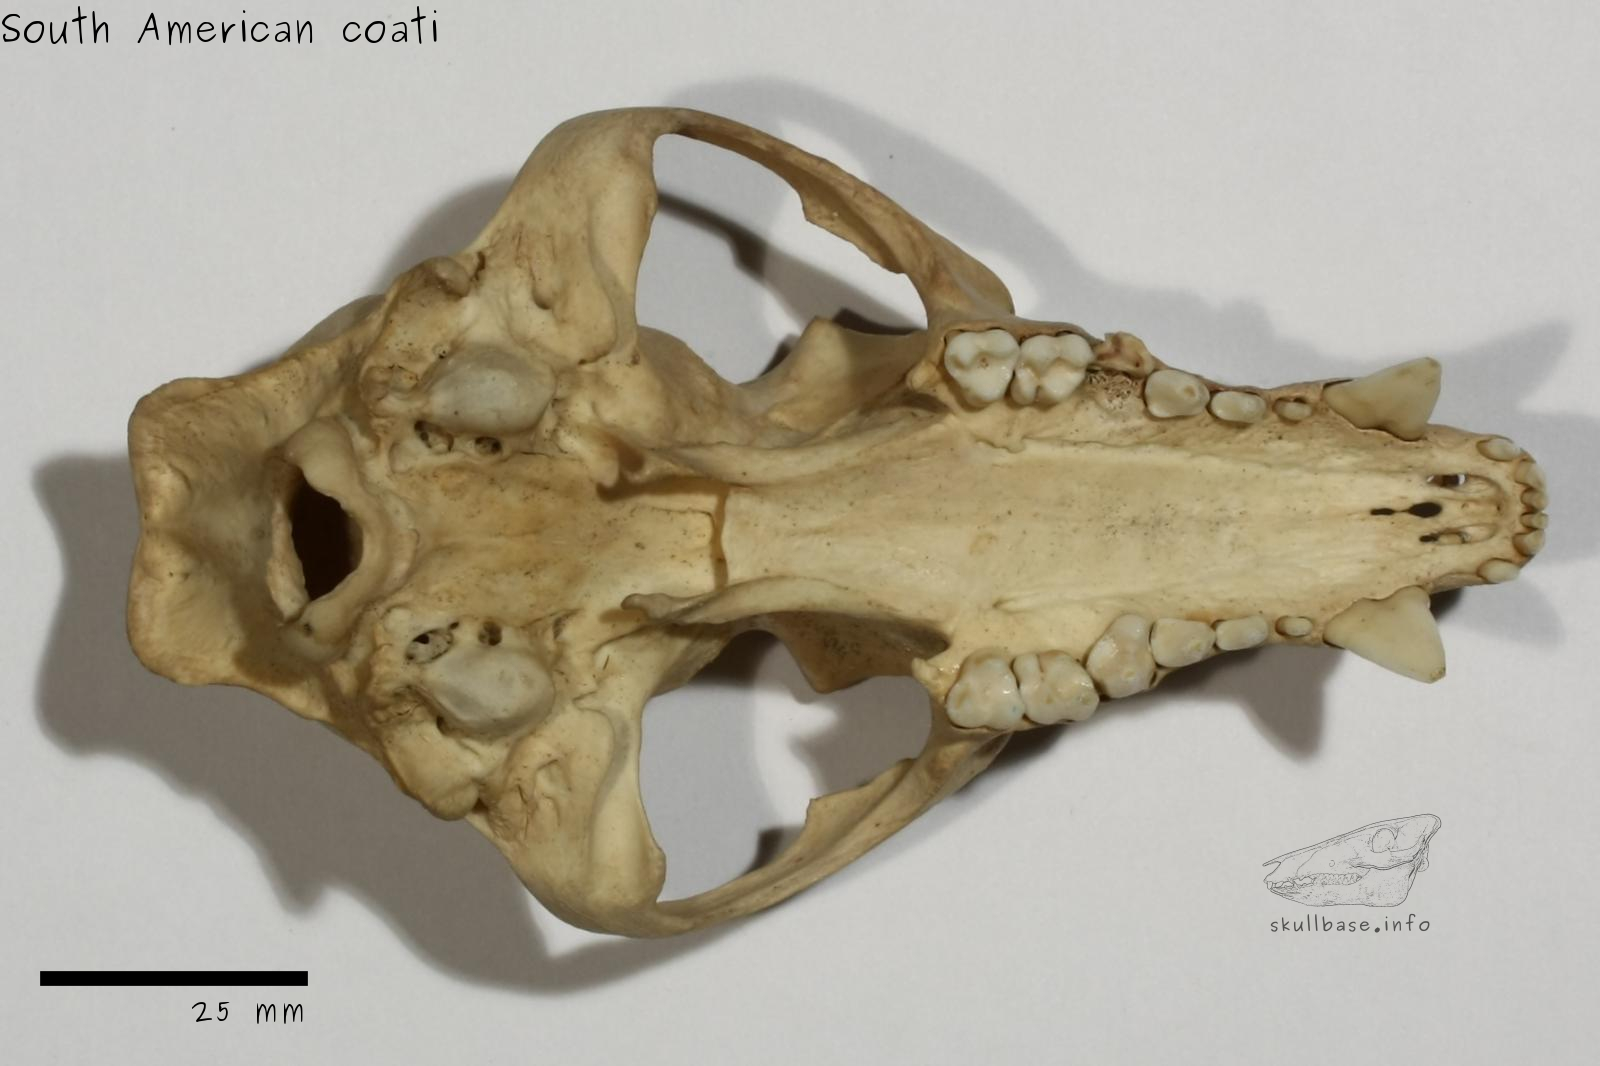 South American coati (Nasua nasua) skull ventral view